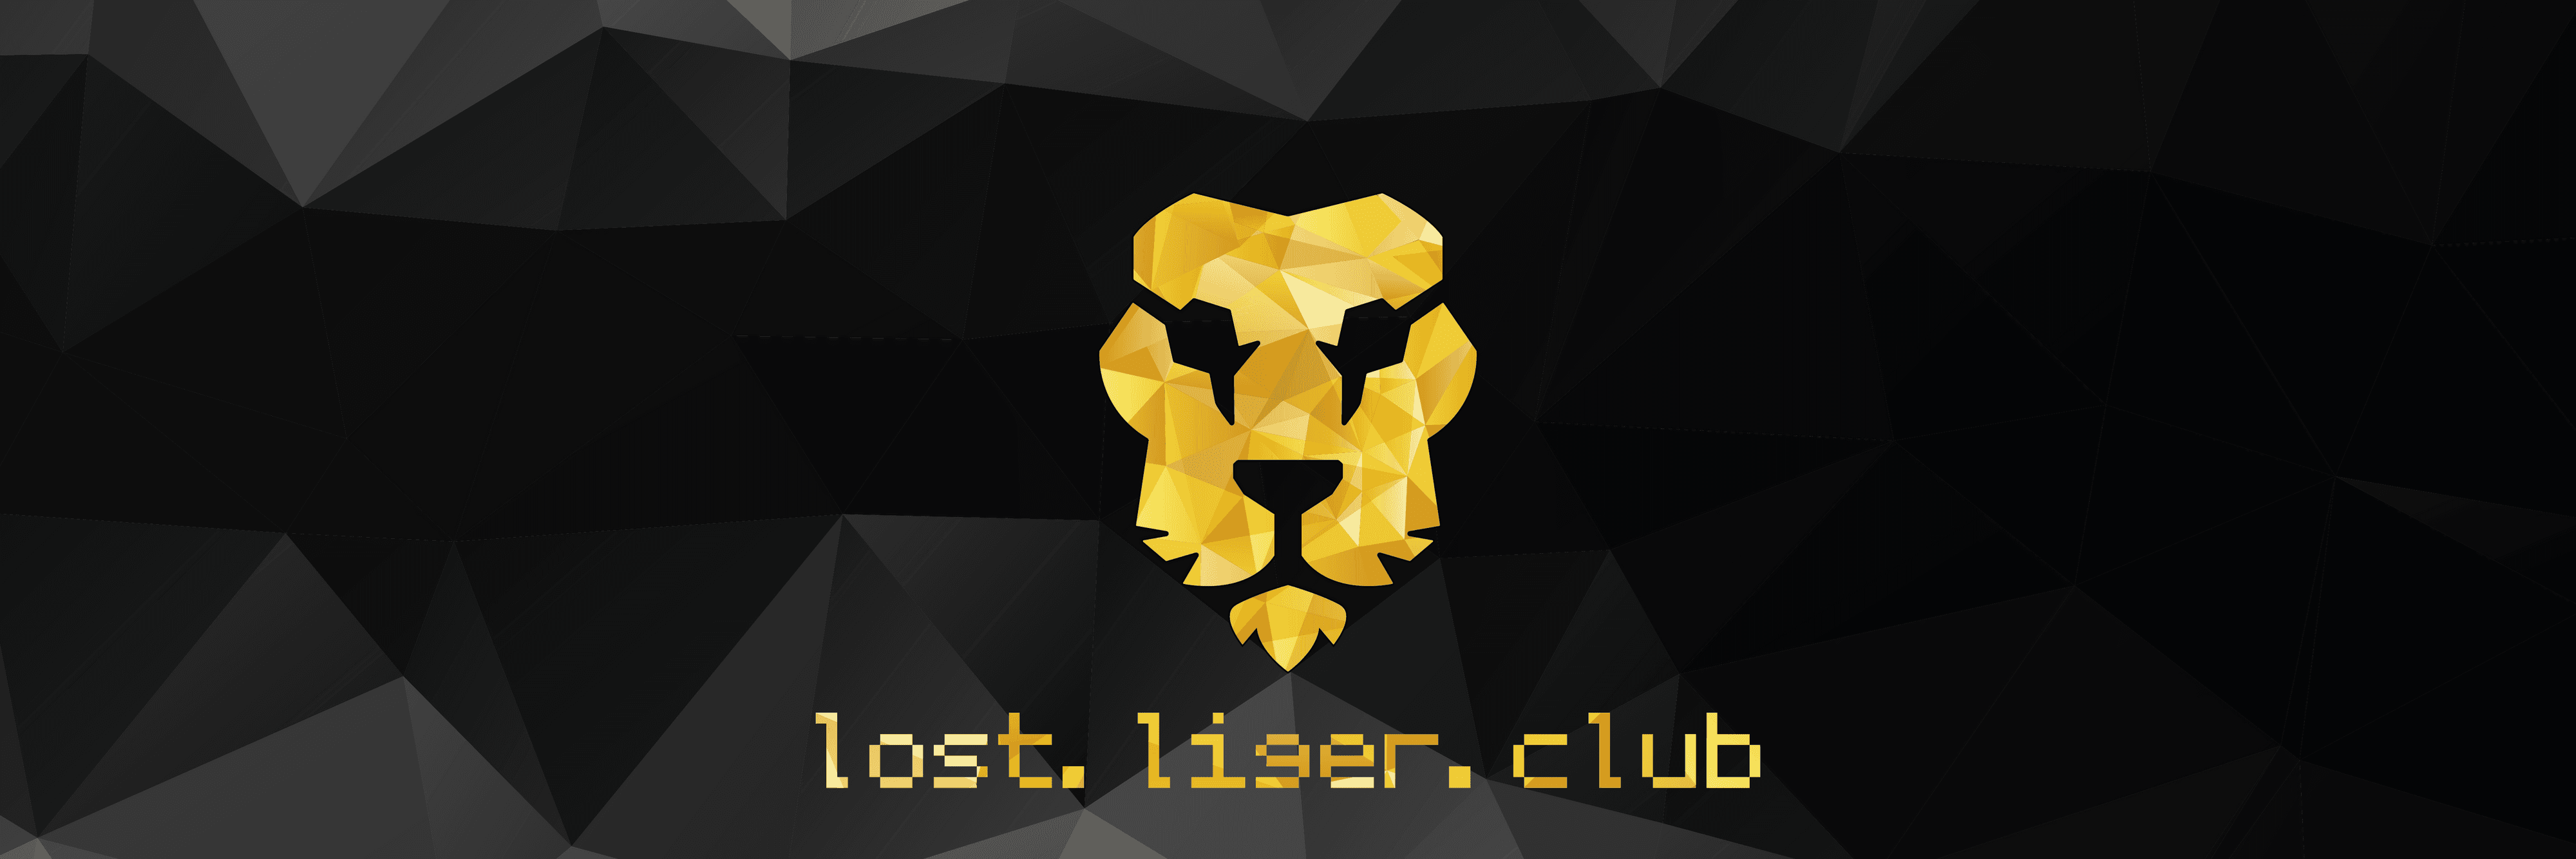 Lost Liger Club